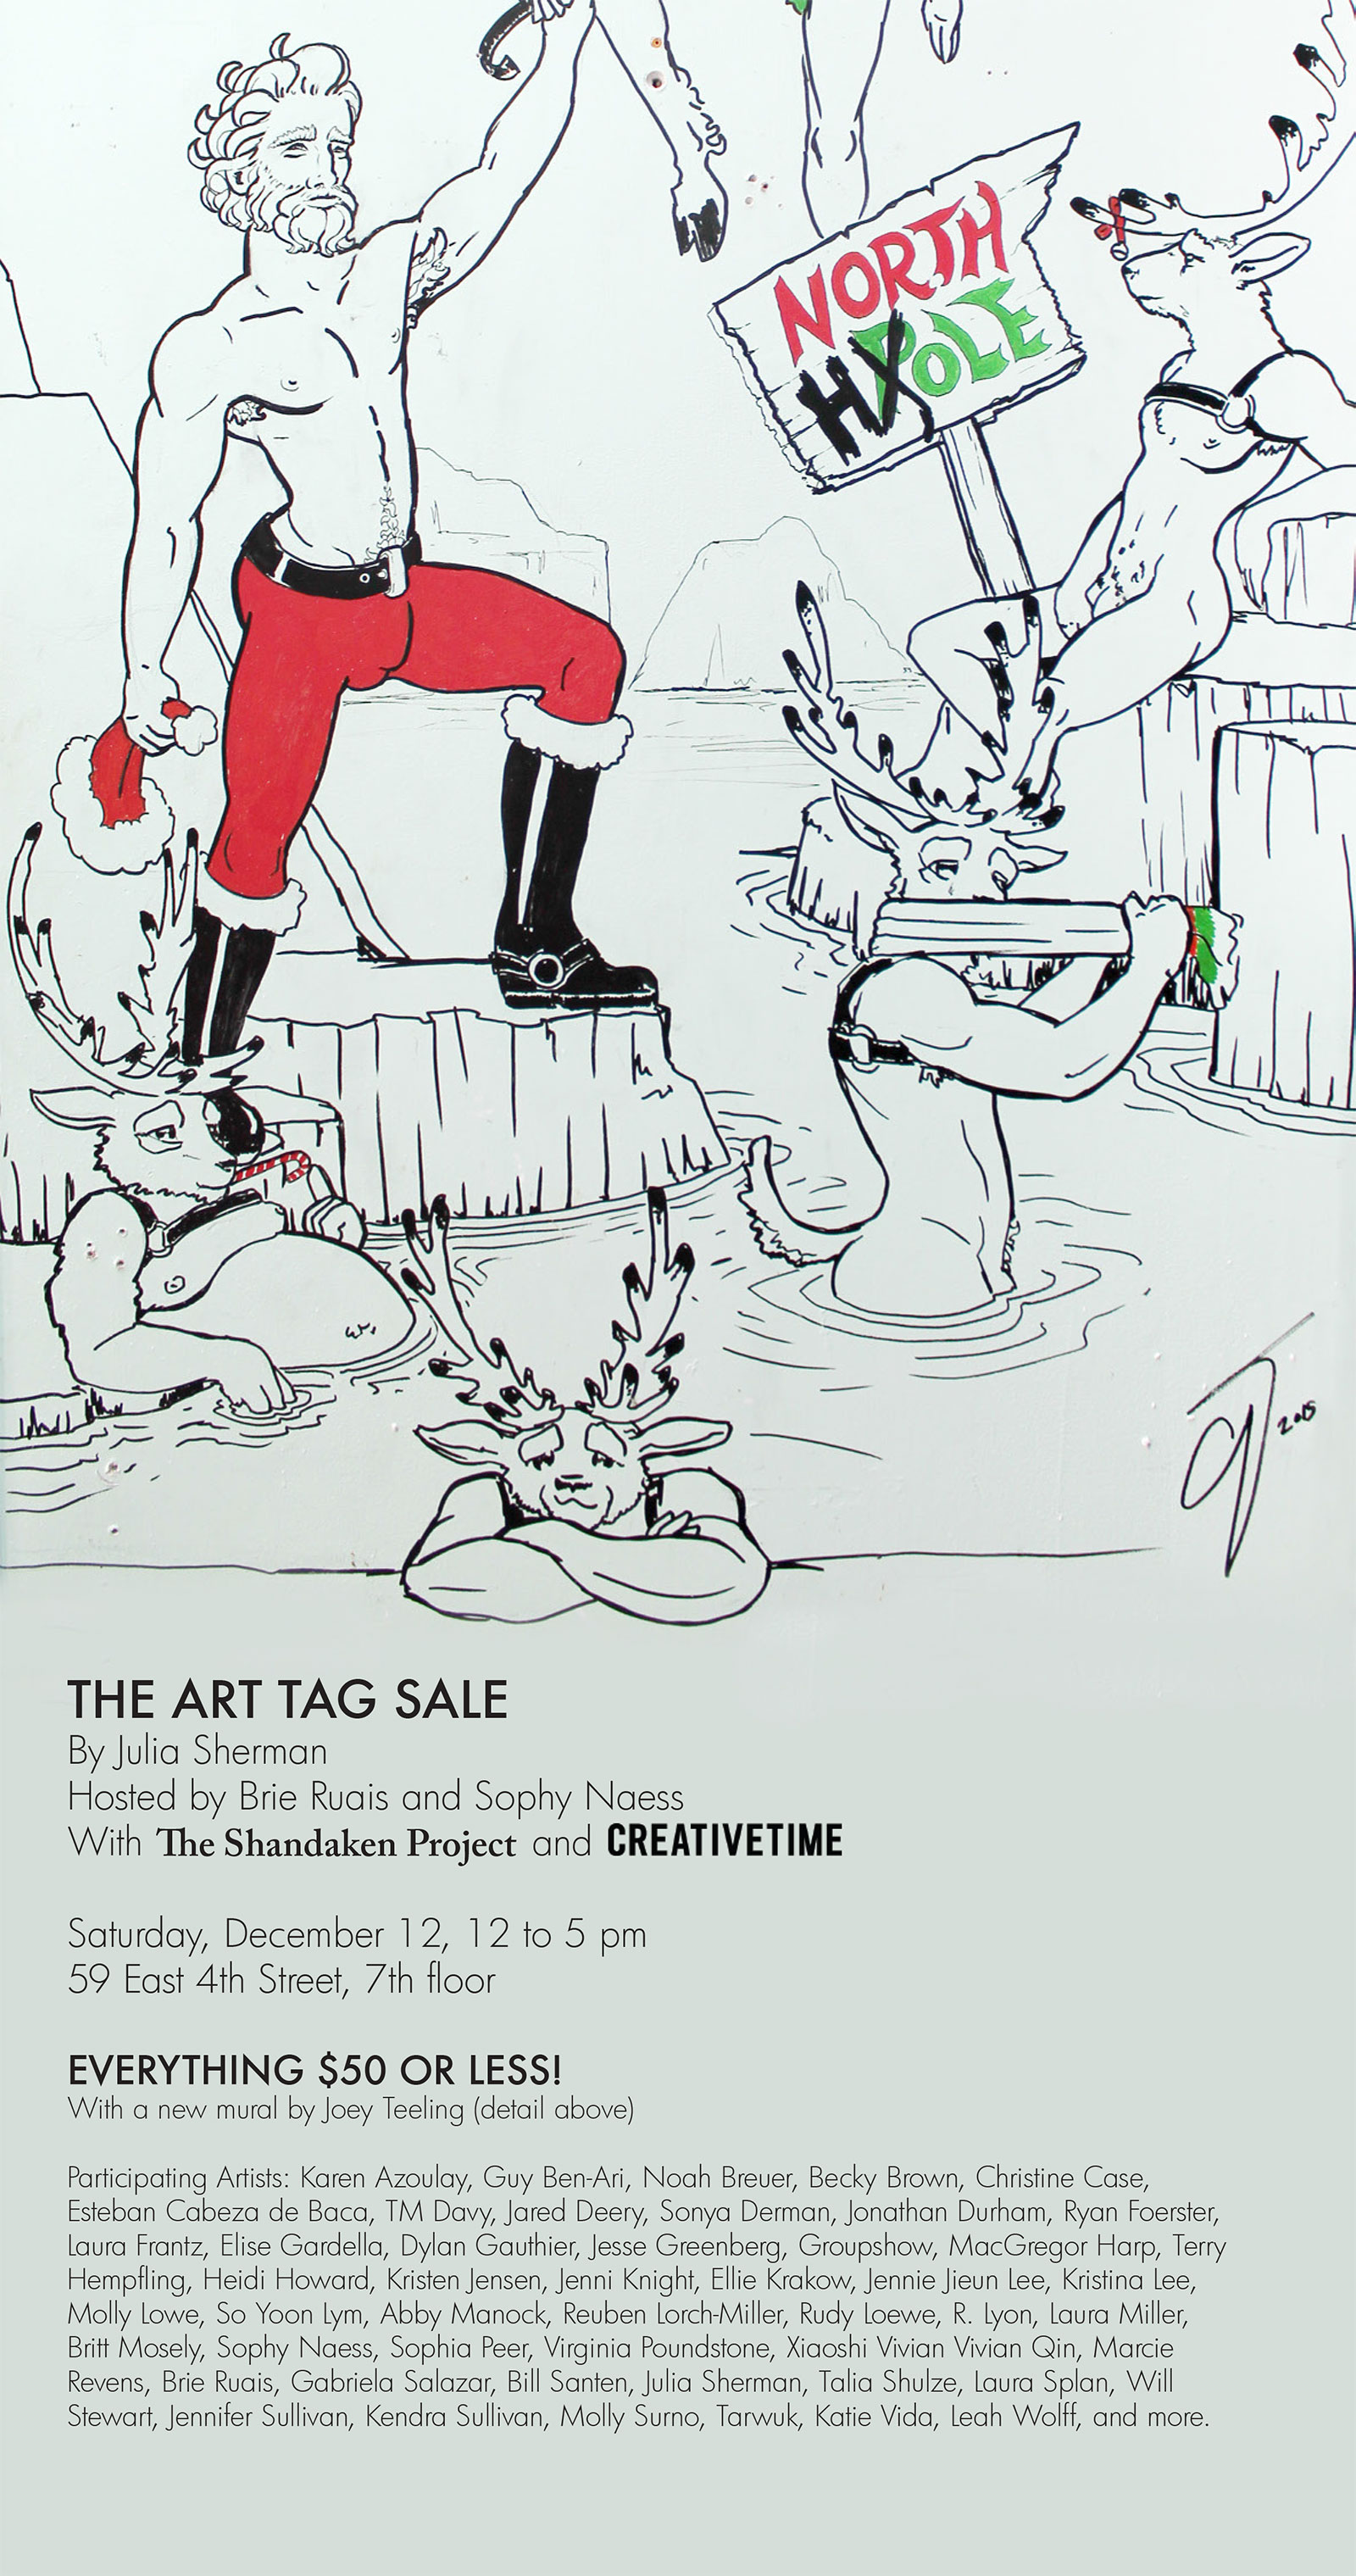 The Art Tag Sale by Julia Sherman